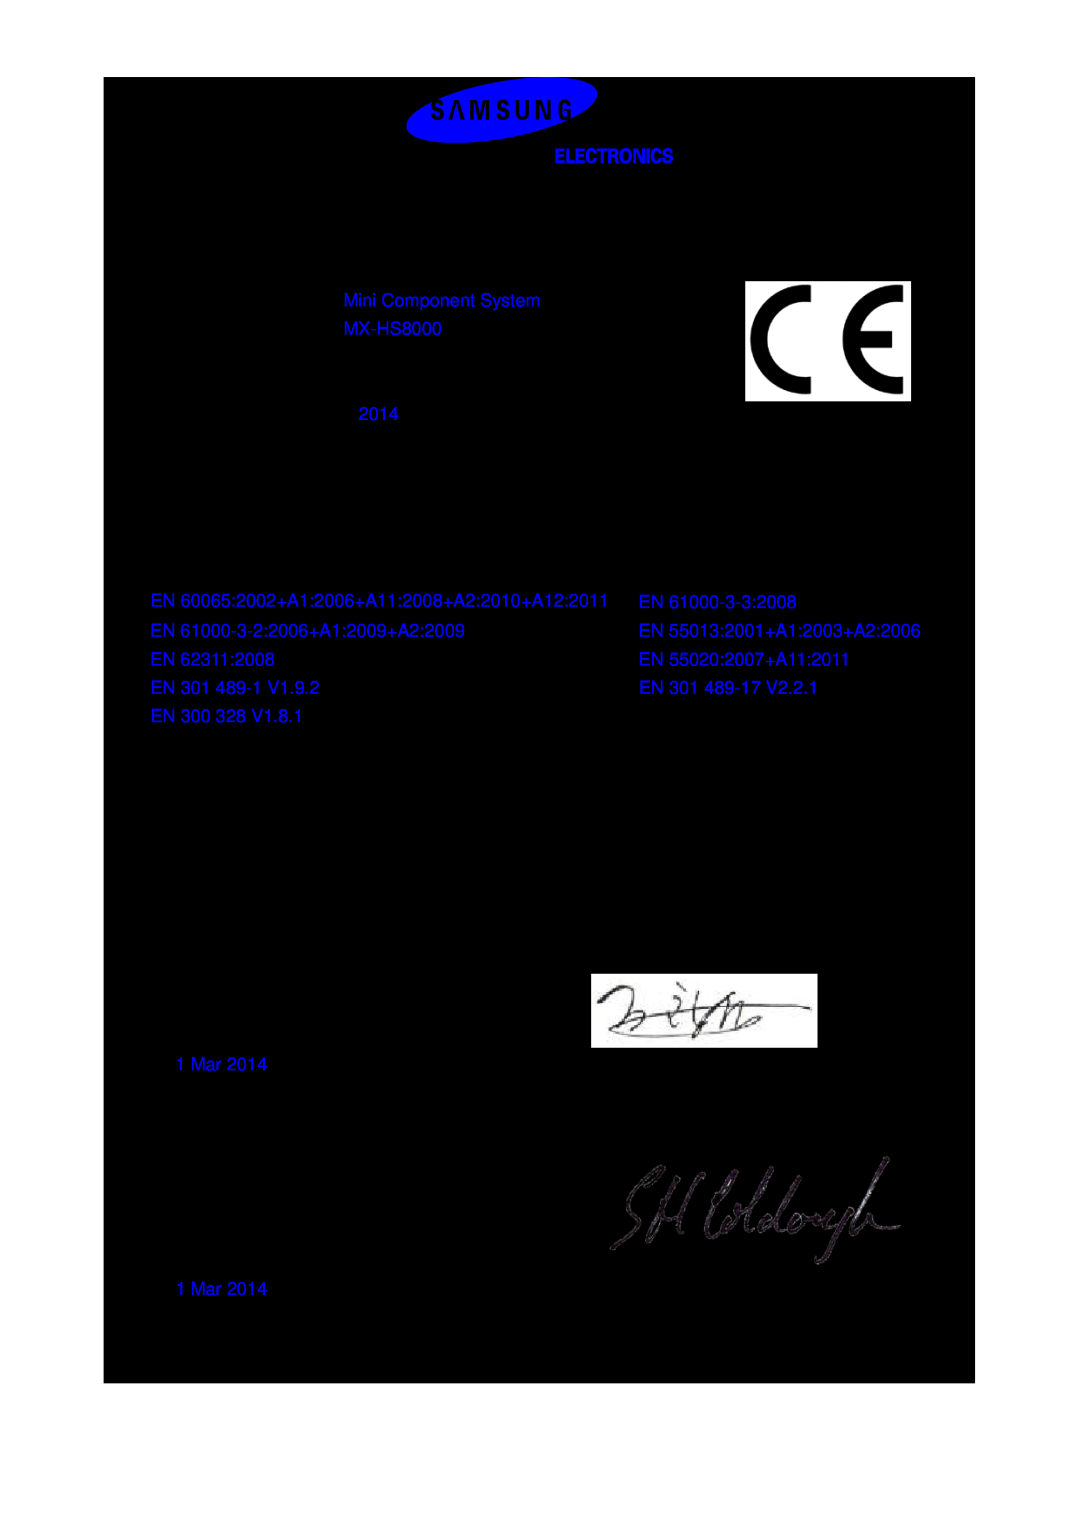 Samsung MX-HS8000/ZF, MX-HS8000/EN manual Declaration of Conformity 